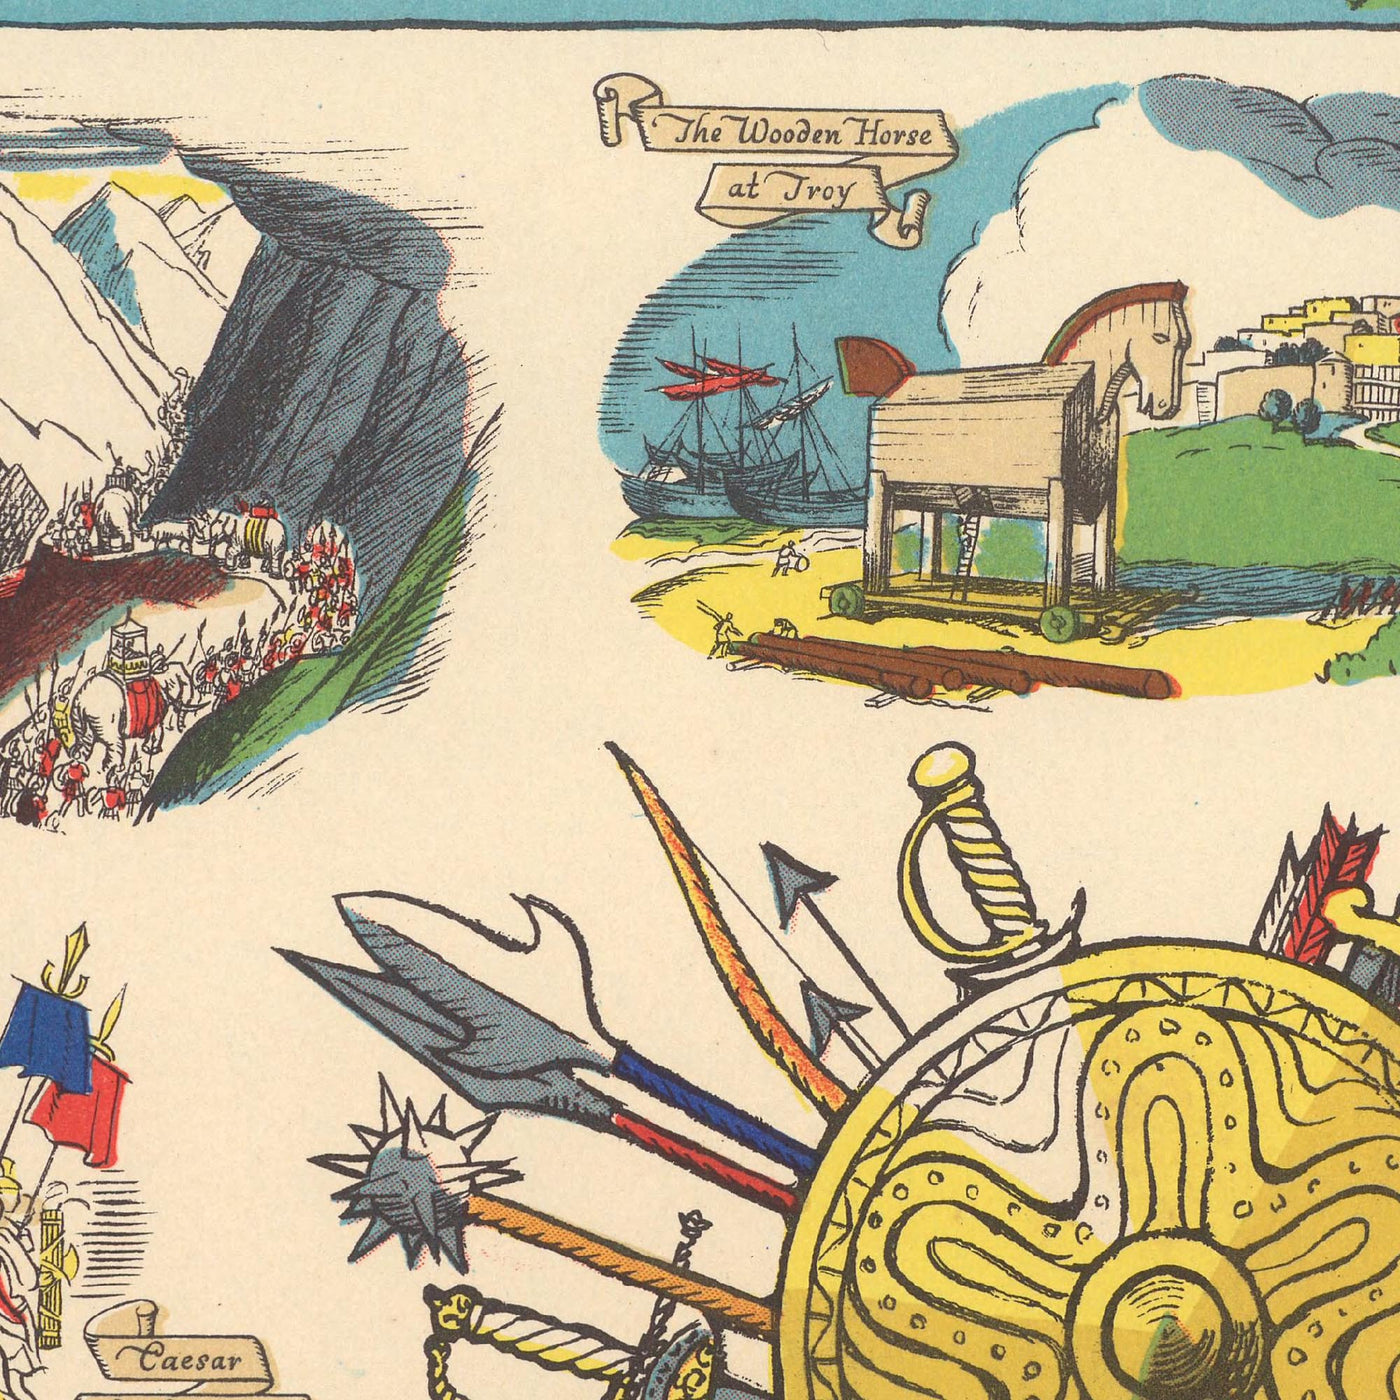 Old World Map by Voute, 1940: Historic Battles, Trojans, Trojan War, Indian Wars, Napoleon, Armada, Alexander the Great, Romans